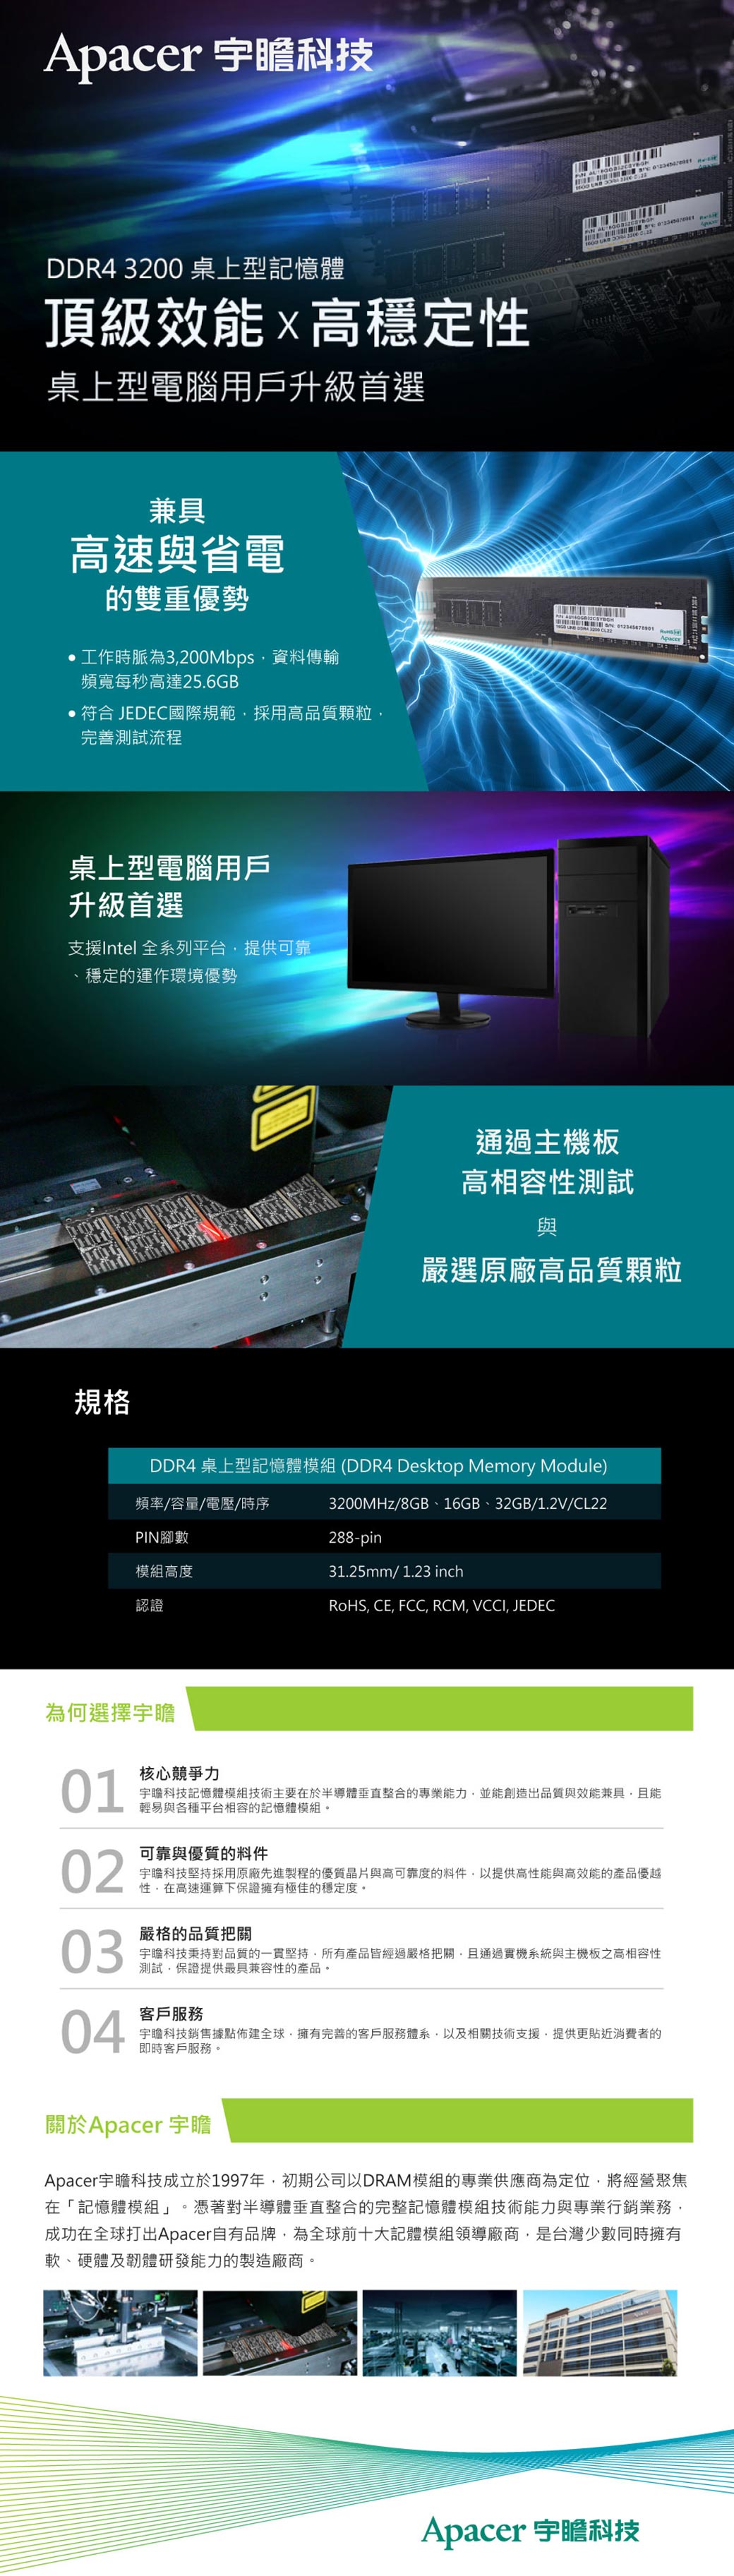 cer t¤     DDR4 00 W鳻ŮįపíwWqΤɯŭ    32Apaݨ㰪tPٹquդu@ɯ߬3200MbpsƶǿWeCF25.6GBŦX JEDECڳWdĥΰ~ɧլy{WqΤɯŭ䴩Intel tCxѥiaíwB@u  ApacerqLDOۮeʴջPYt~ɳWDDR4 WOҲ(DDR4 Desktop Memory Module)Wv/eq/q/ɧ3200MHz/8GBB16GBB32GB/1.2V/CL22288-pin31.25mm/1.23 inchPIN}ƼҲհ׻{RoHS CE FCC RCM, VCCI, JEDECܦt¤01֤ߤOt¤ްOҲէ޳NDnbb髫XM~O,ïгyX~Pįݨ,B໴PUإxۮeOҲաC02iaPu誺ƥt¤ްĥέtis{u费Piaתƥ,HѰʯPį઺~uV,btBUOҾ֦ΪíwסC03Y檺~t¤ުë~誺@e,Ҧ~ҸgLY,BqLtλPDOۮeʴ,OҴѳ̨ݮeʪ~C04ȤAȦt¤޾PIGإy,֦ȤAt,Hά޳N䴩,ѧKO̪YɫȤAȡCApacer t¤Apacert¤ަߩ1997~,qHDRAMҲժM~Ӭw,NgEJbuOҲաv ̵۹b髫XOҲէ޳NOPM~P~,\byXApacerۦ~P,yeQjOҲջɼt,OxWּƦPɾ֦nBwζoOsytӡCApacer t¤